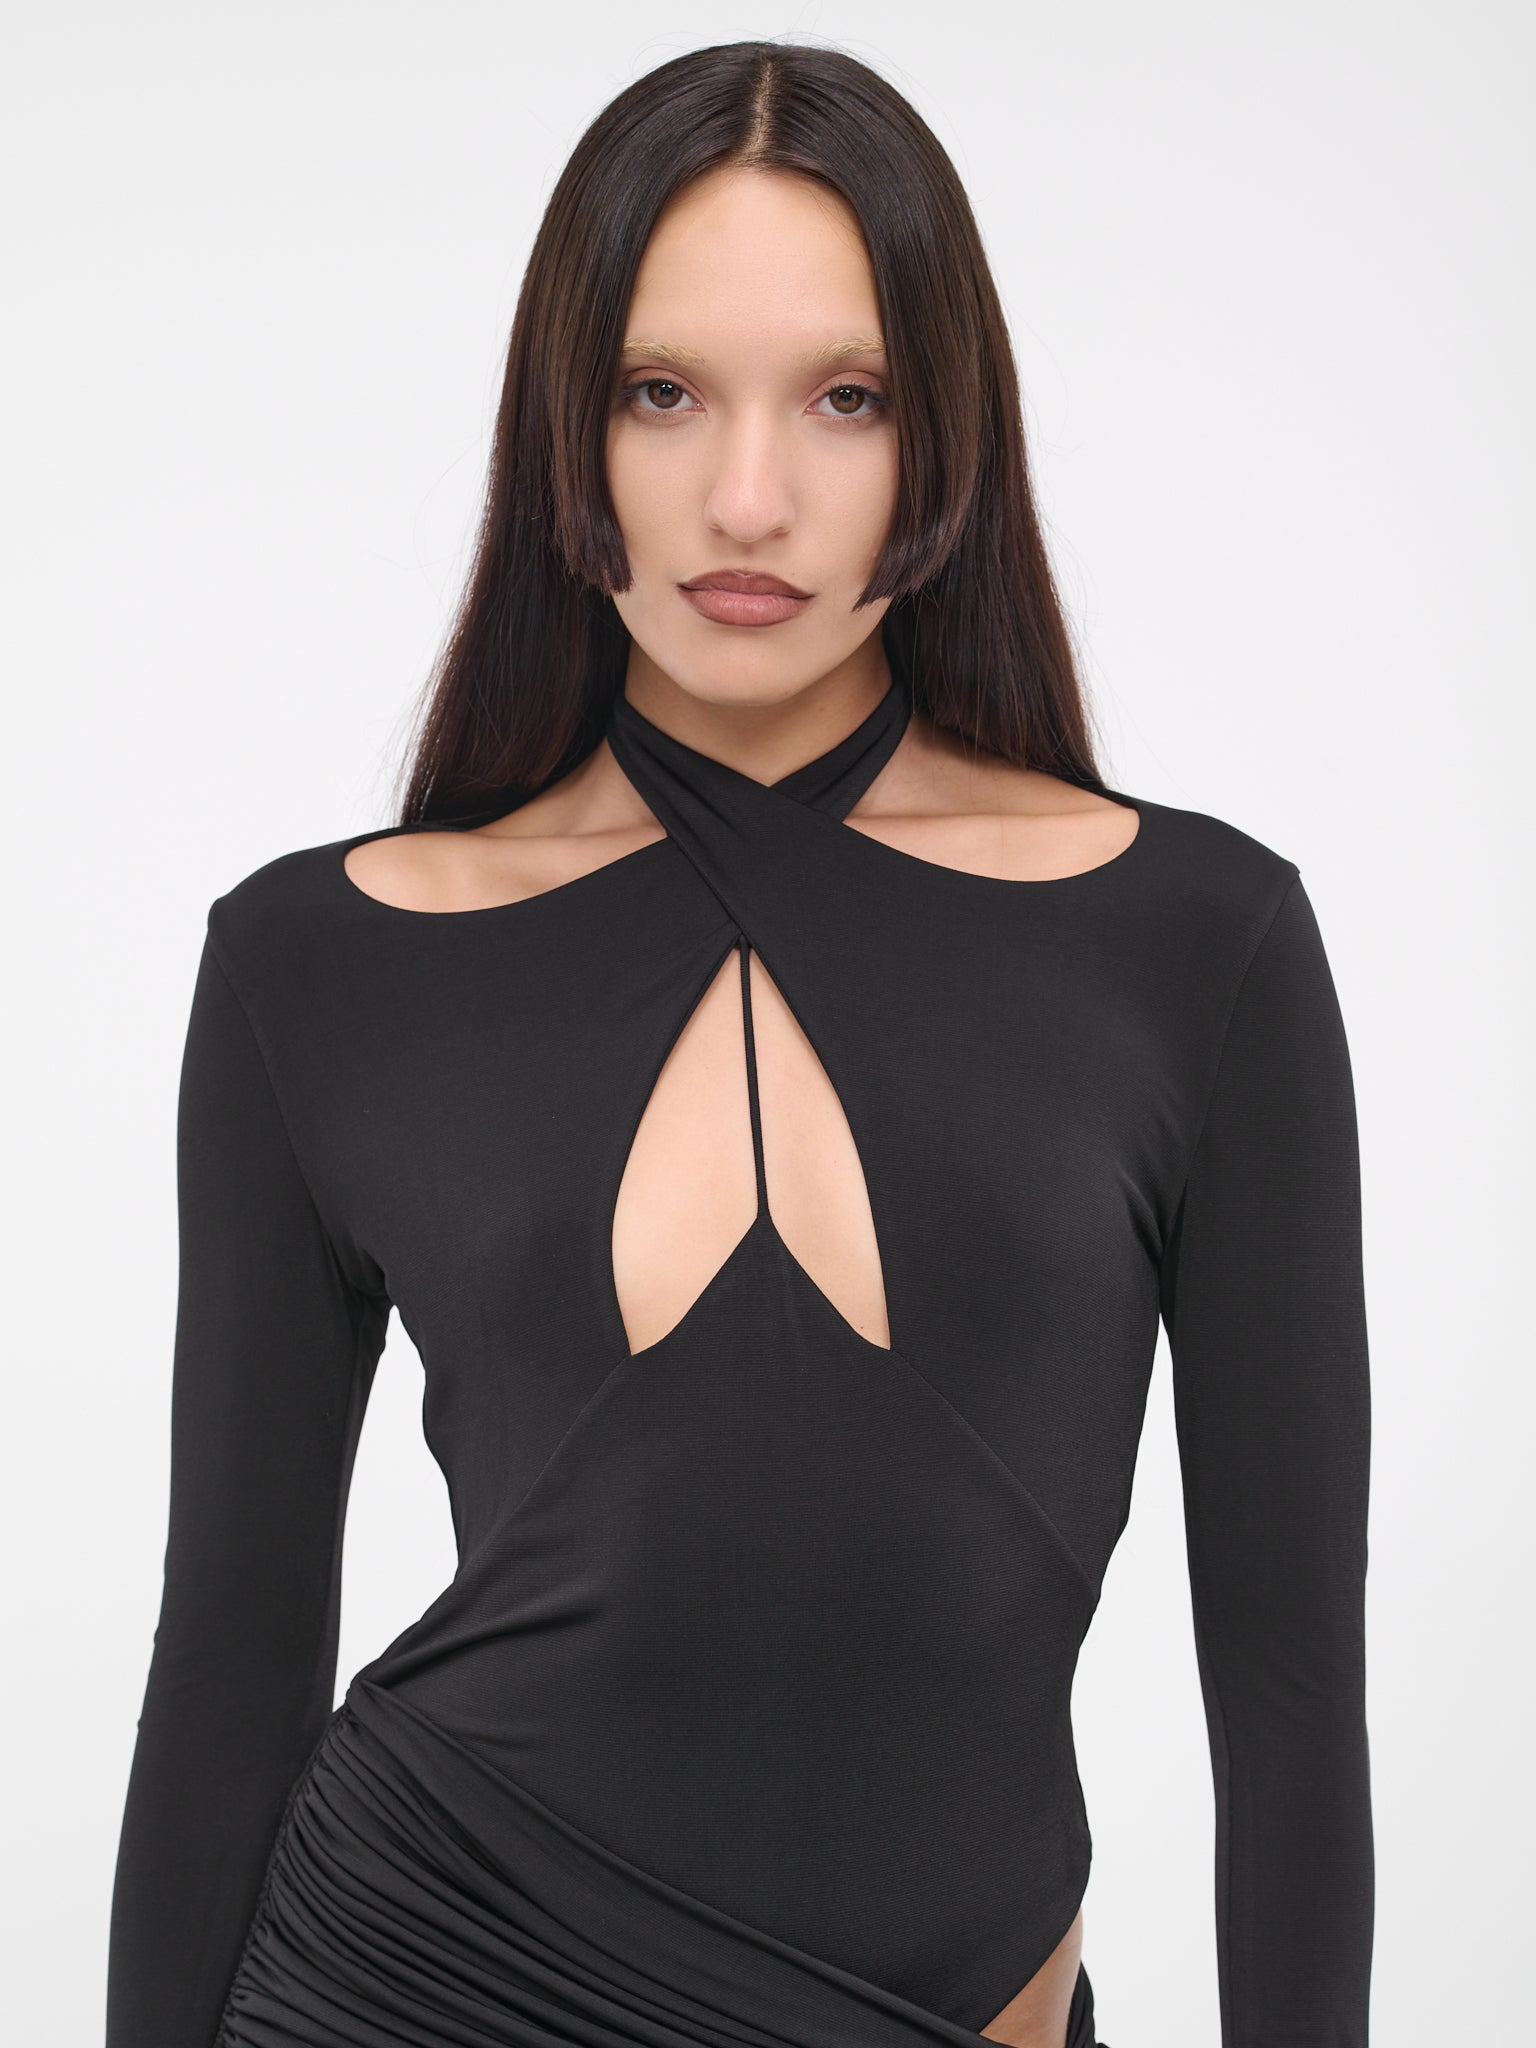 Cut-Out Mini Dress (BKPECOLYDR04-BLACK)